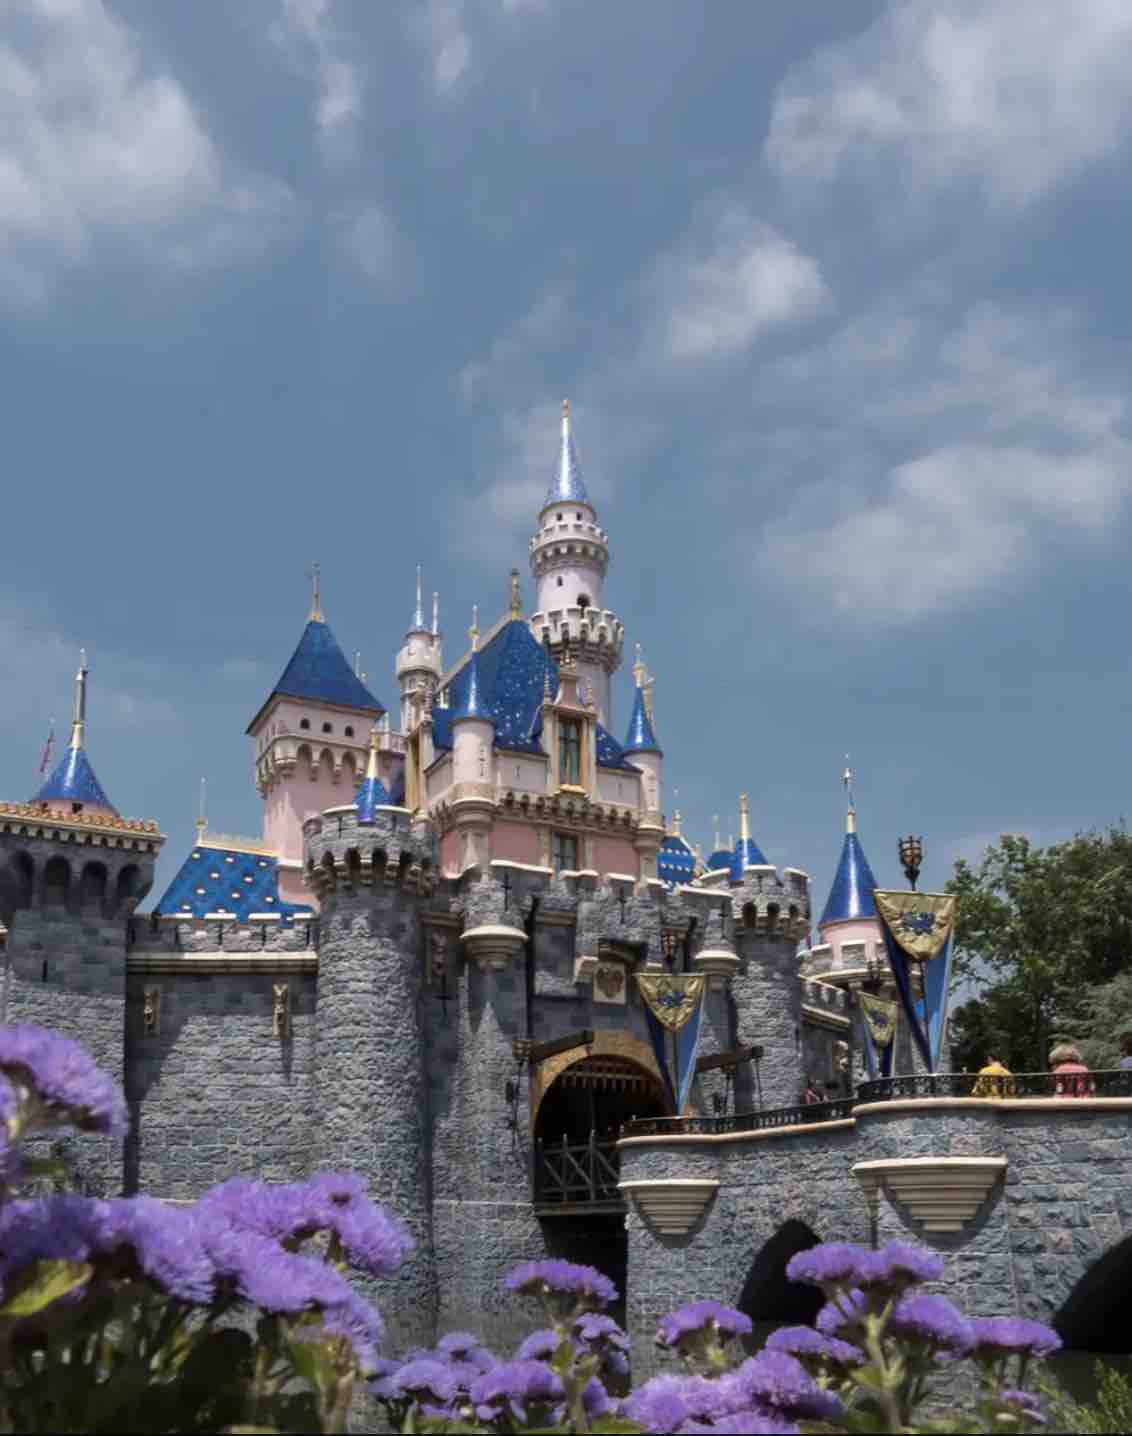 Disneyland California